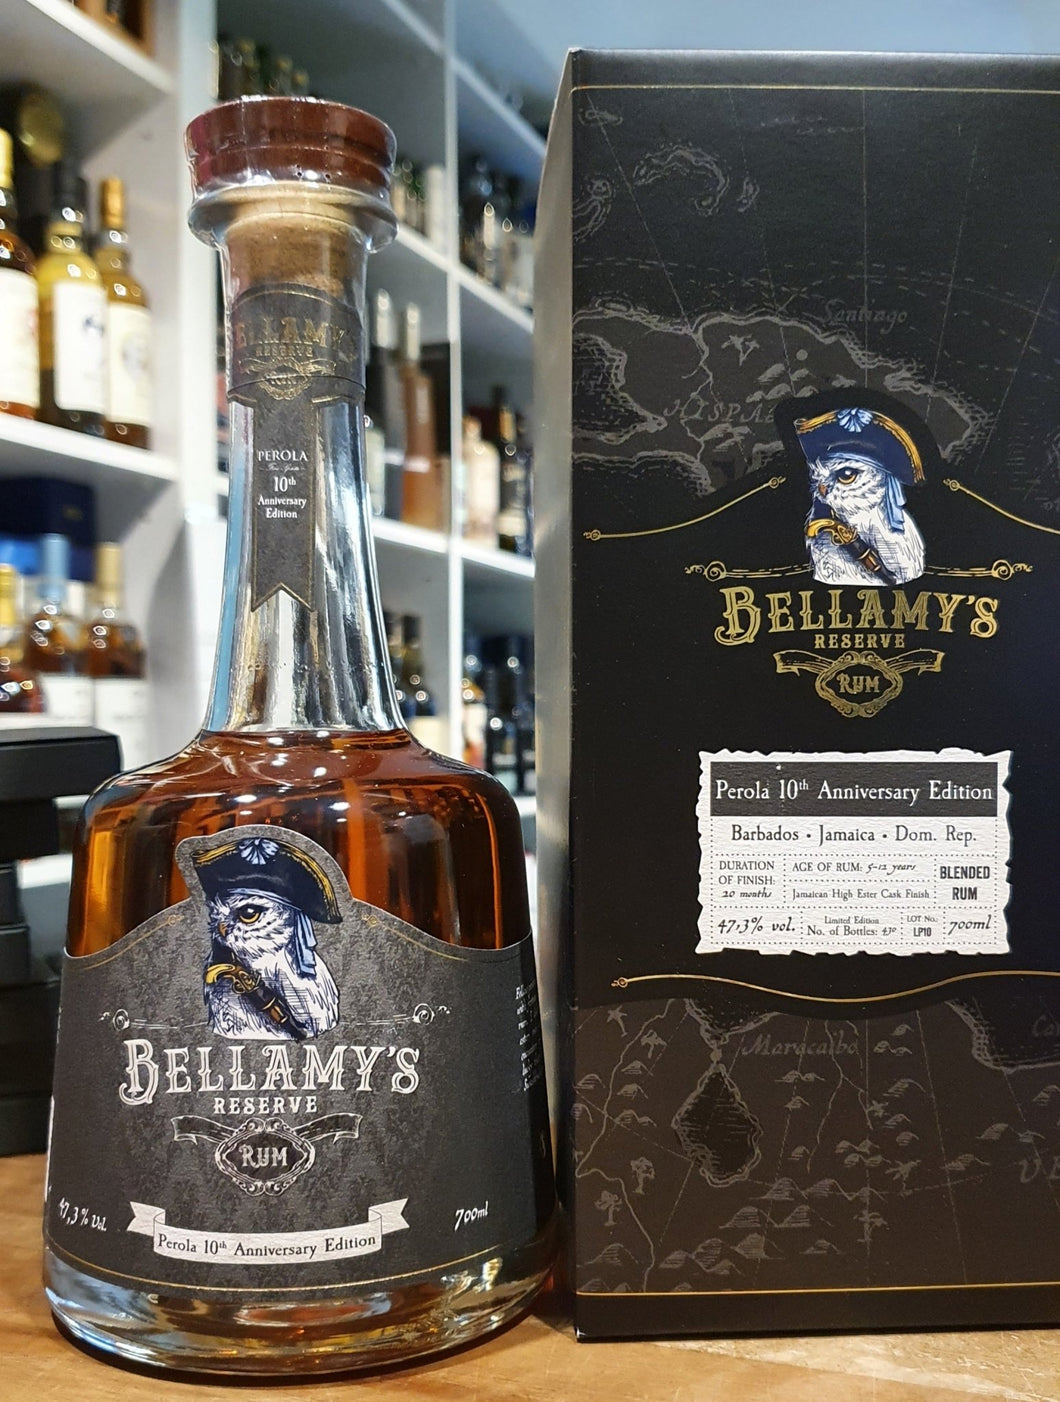 Bellamy's Reserve Rum 0,7l Jamaican High Ester Cask Finish Perola 10th Anniversary Edition 47.3% mit Geschenkpackung